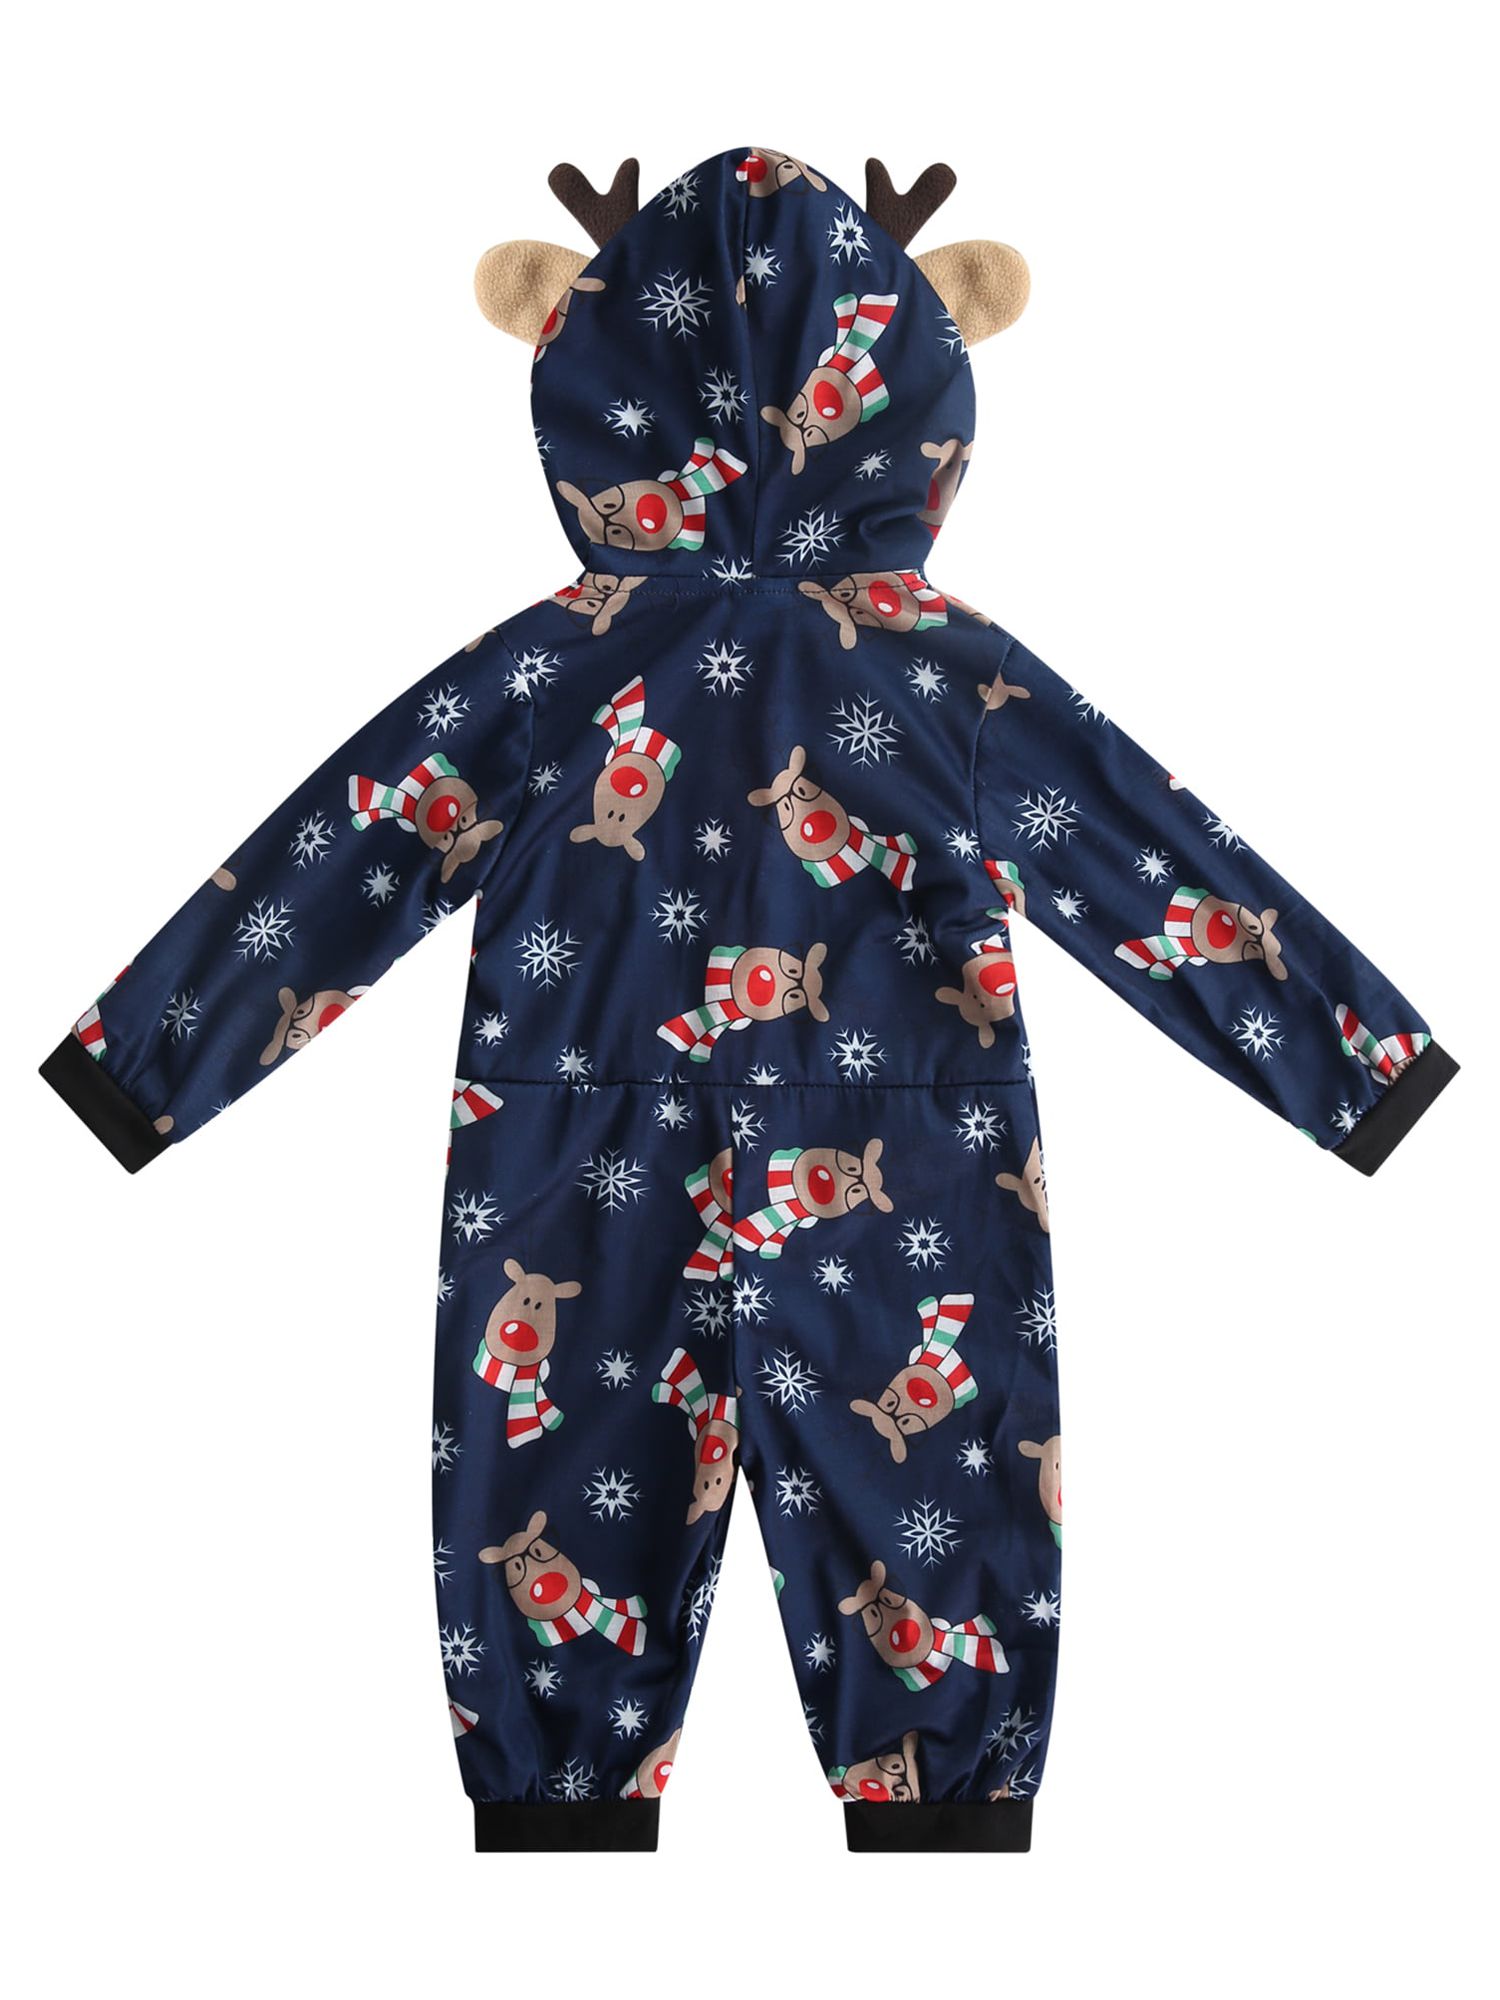 Shuttle tree Family Christmas Matching Pajamas Cartoon Deer Hooded Onesies Xmas One-Pieces Sleepwear Adult Kids Baby - image 3 of 7